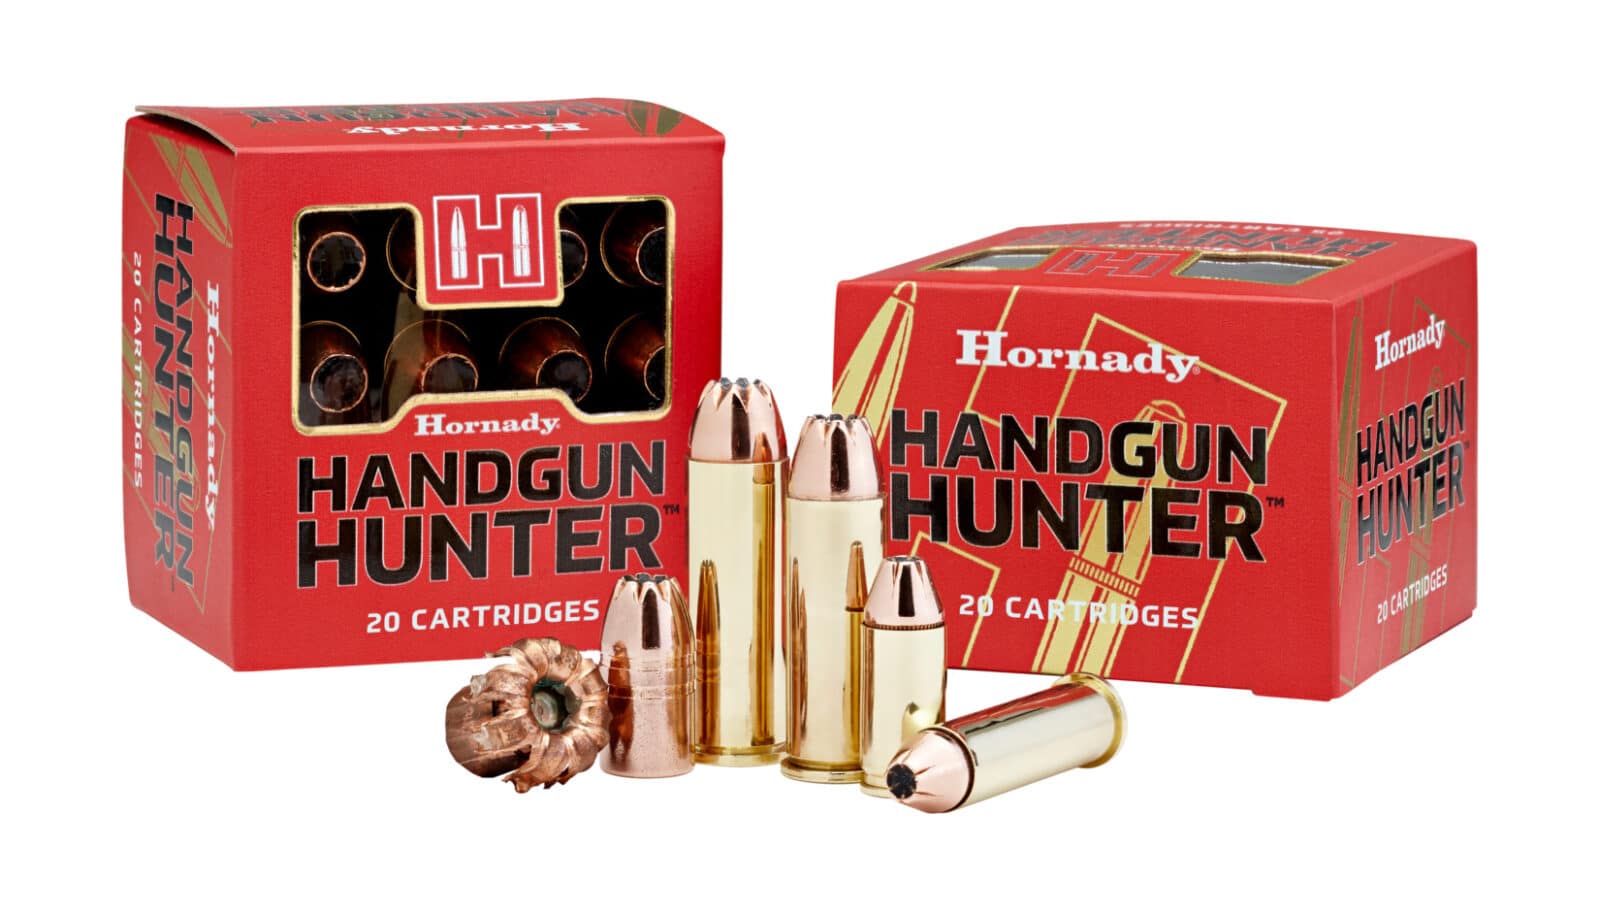 Hornady Handgun Hunter line of ammunition on display